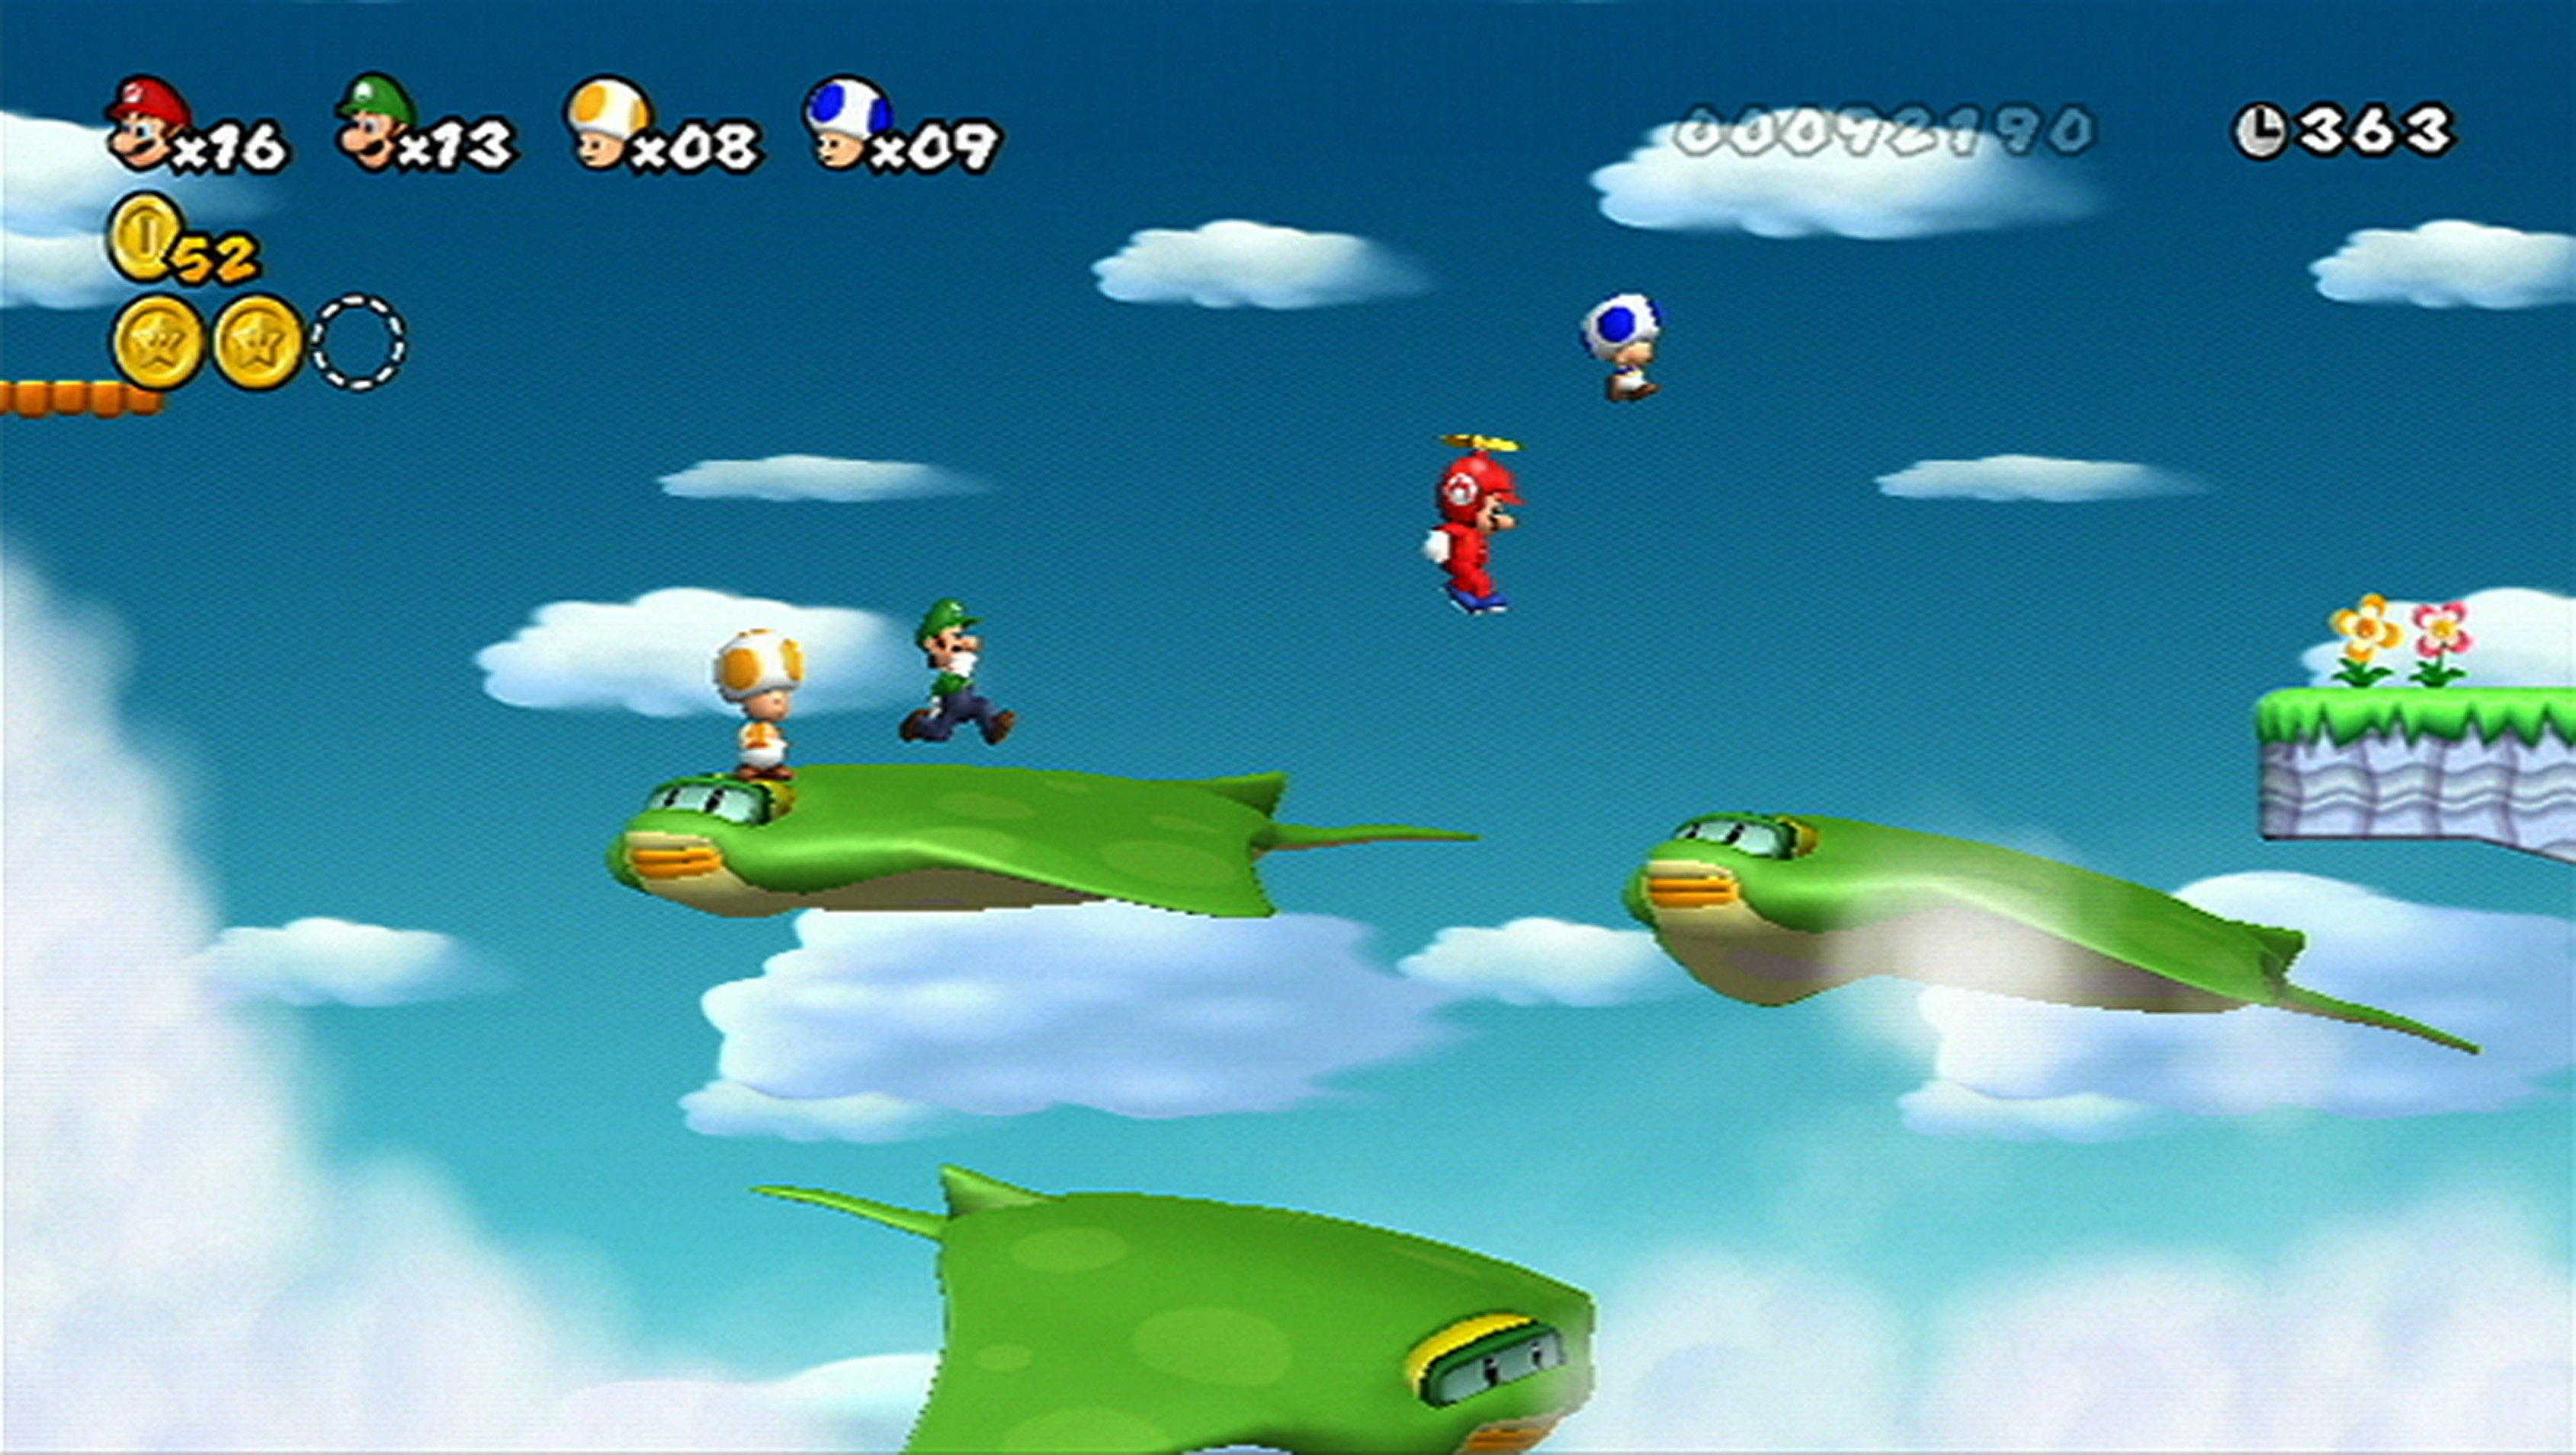  New Super Mario Bros. Wii : Nintendo of America: Video Games